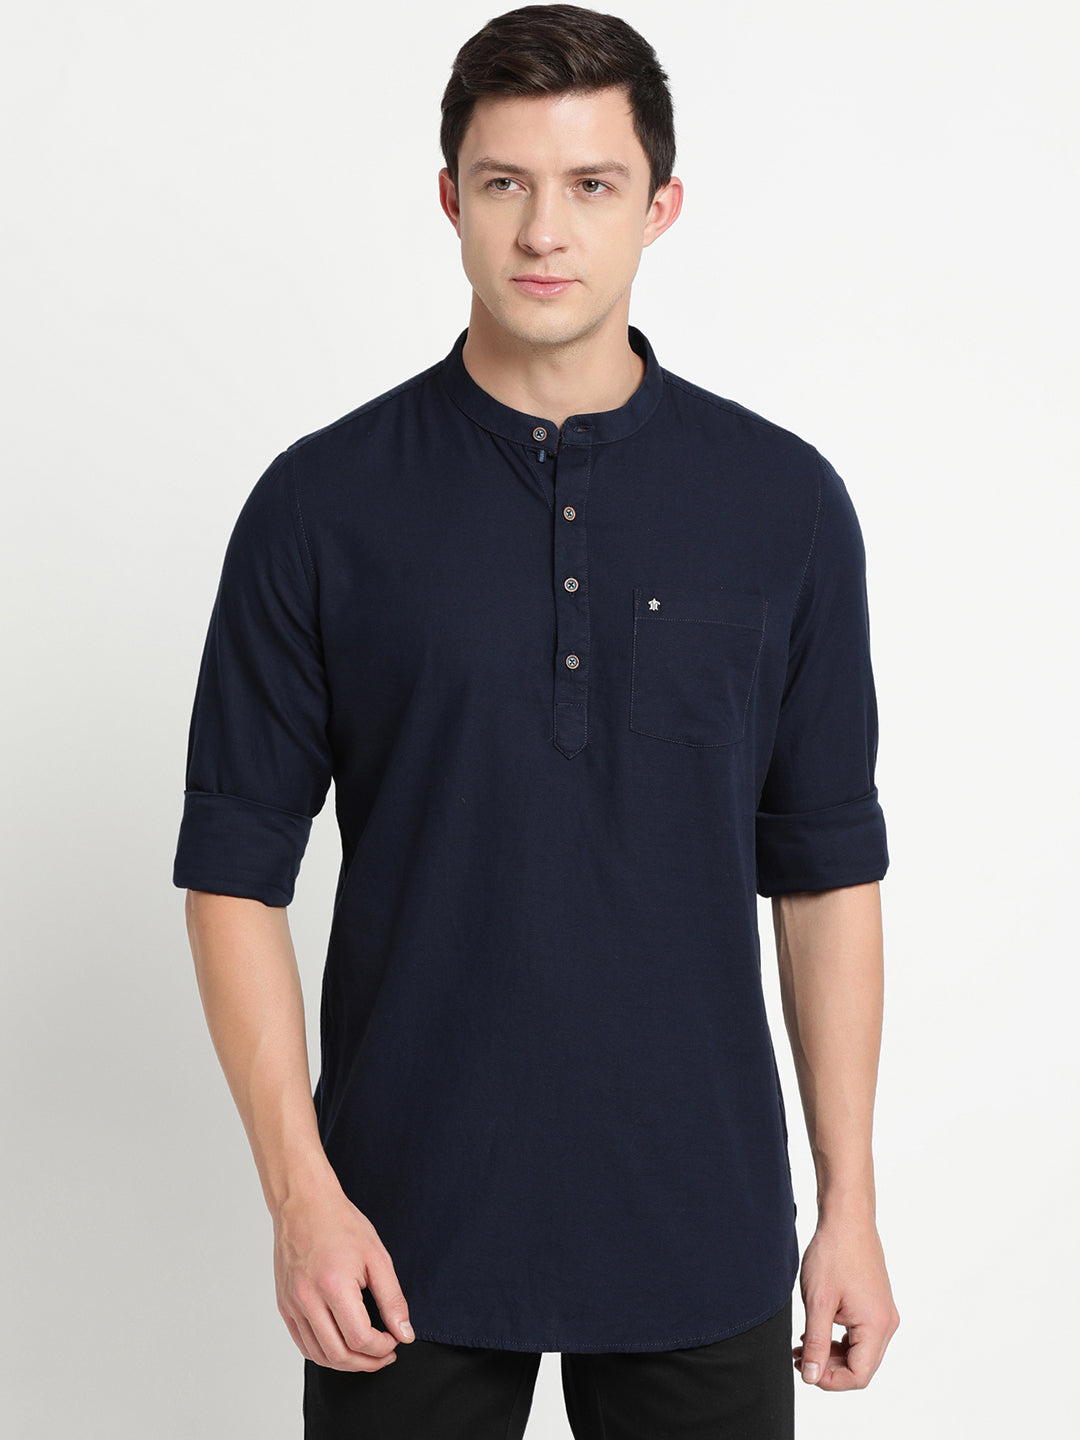 Navy Blue Pure Cotton Solid Kurta Shirt